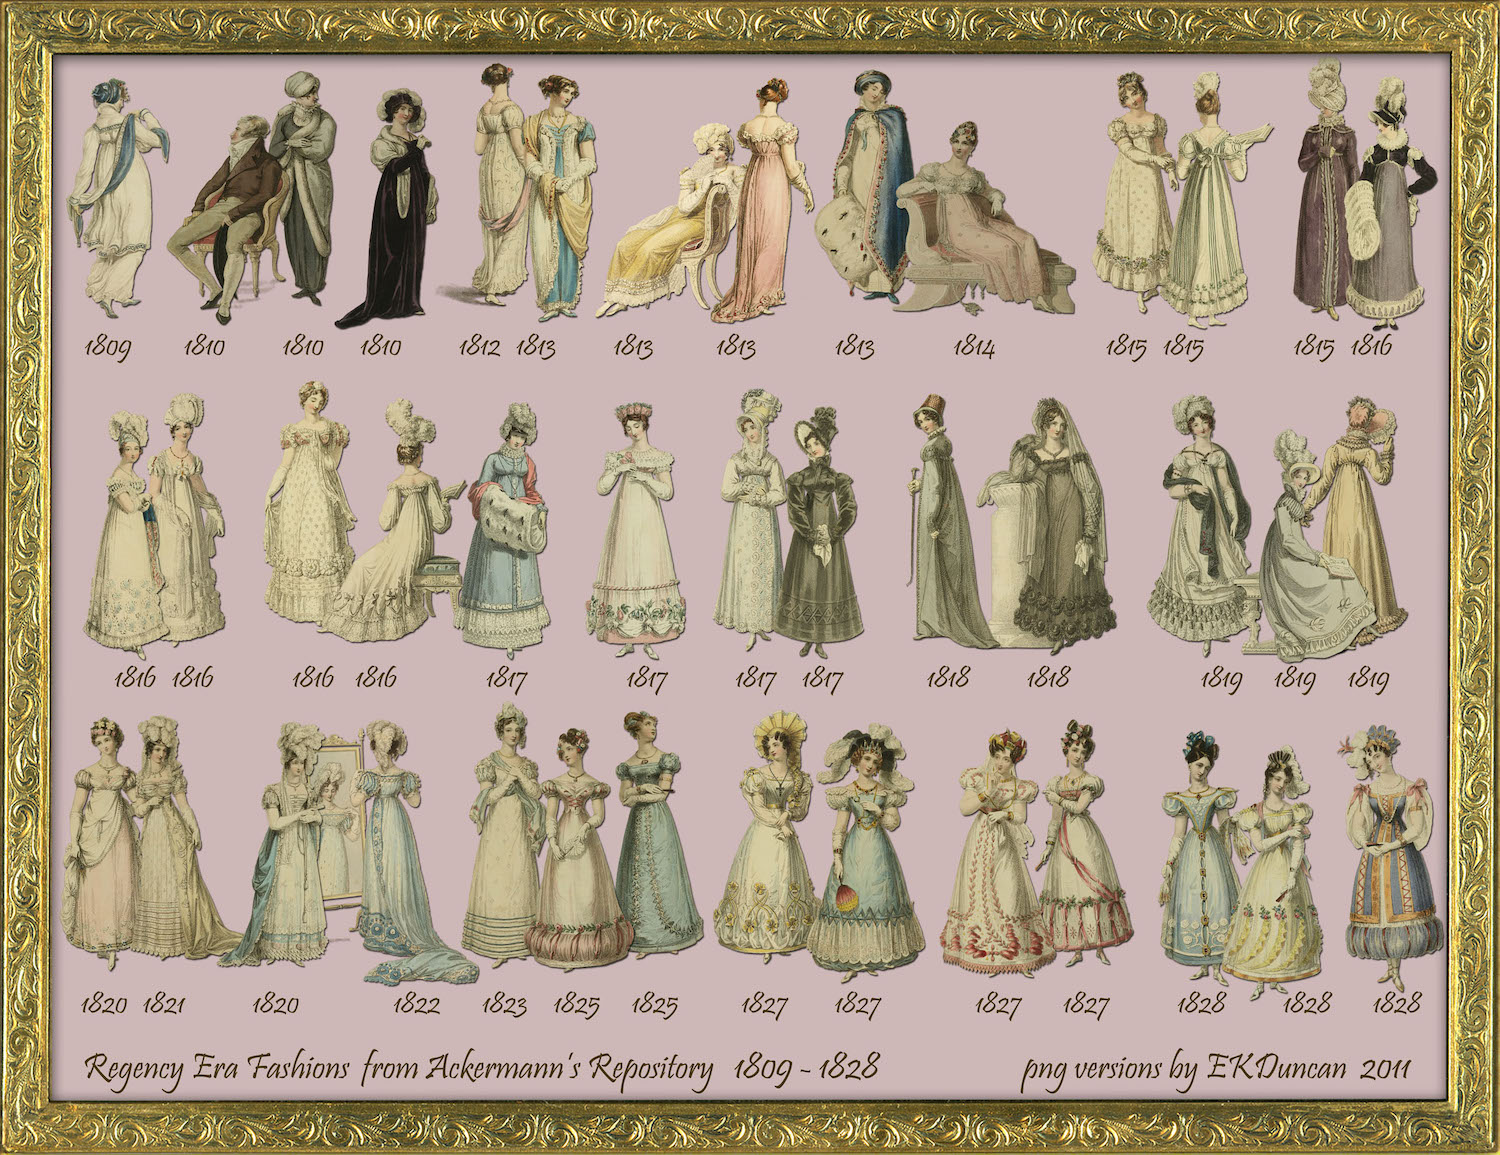 regency era fashion from 1809 to 1828